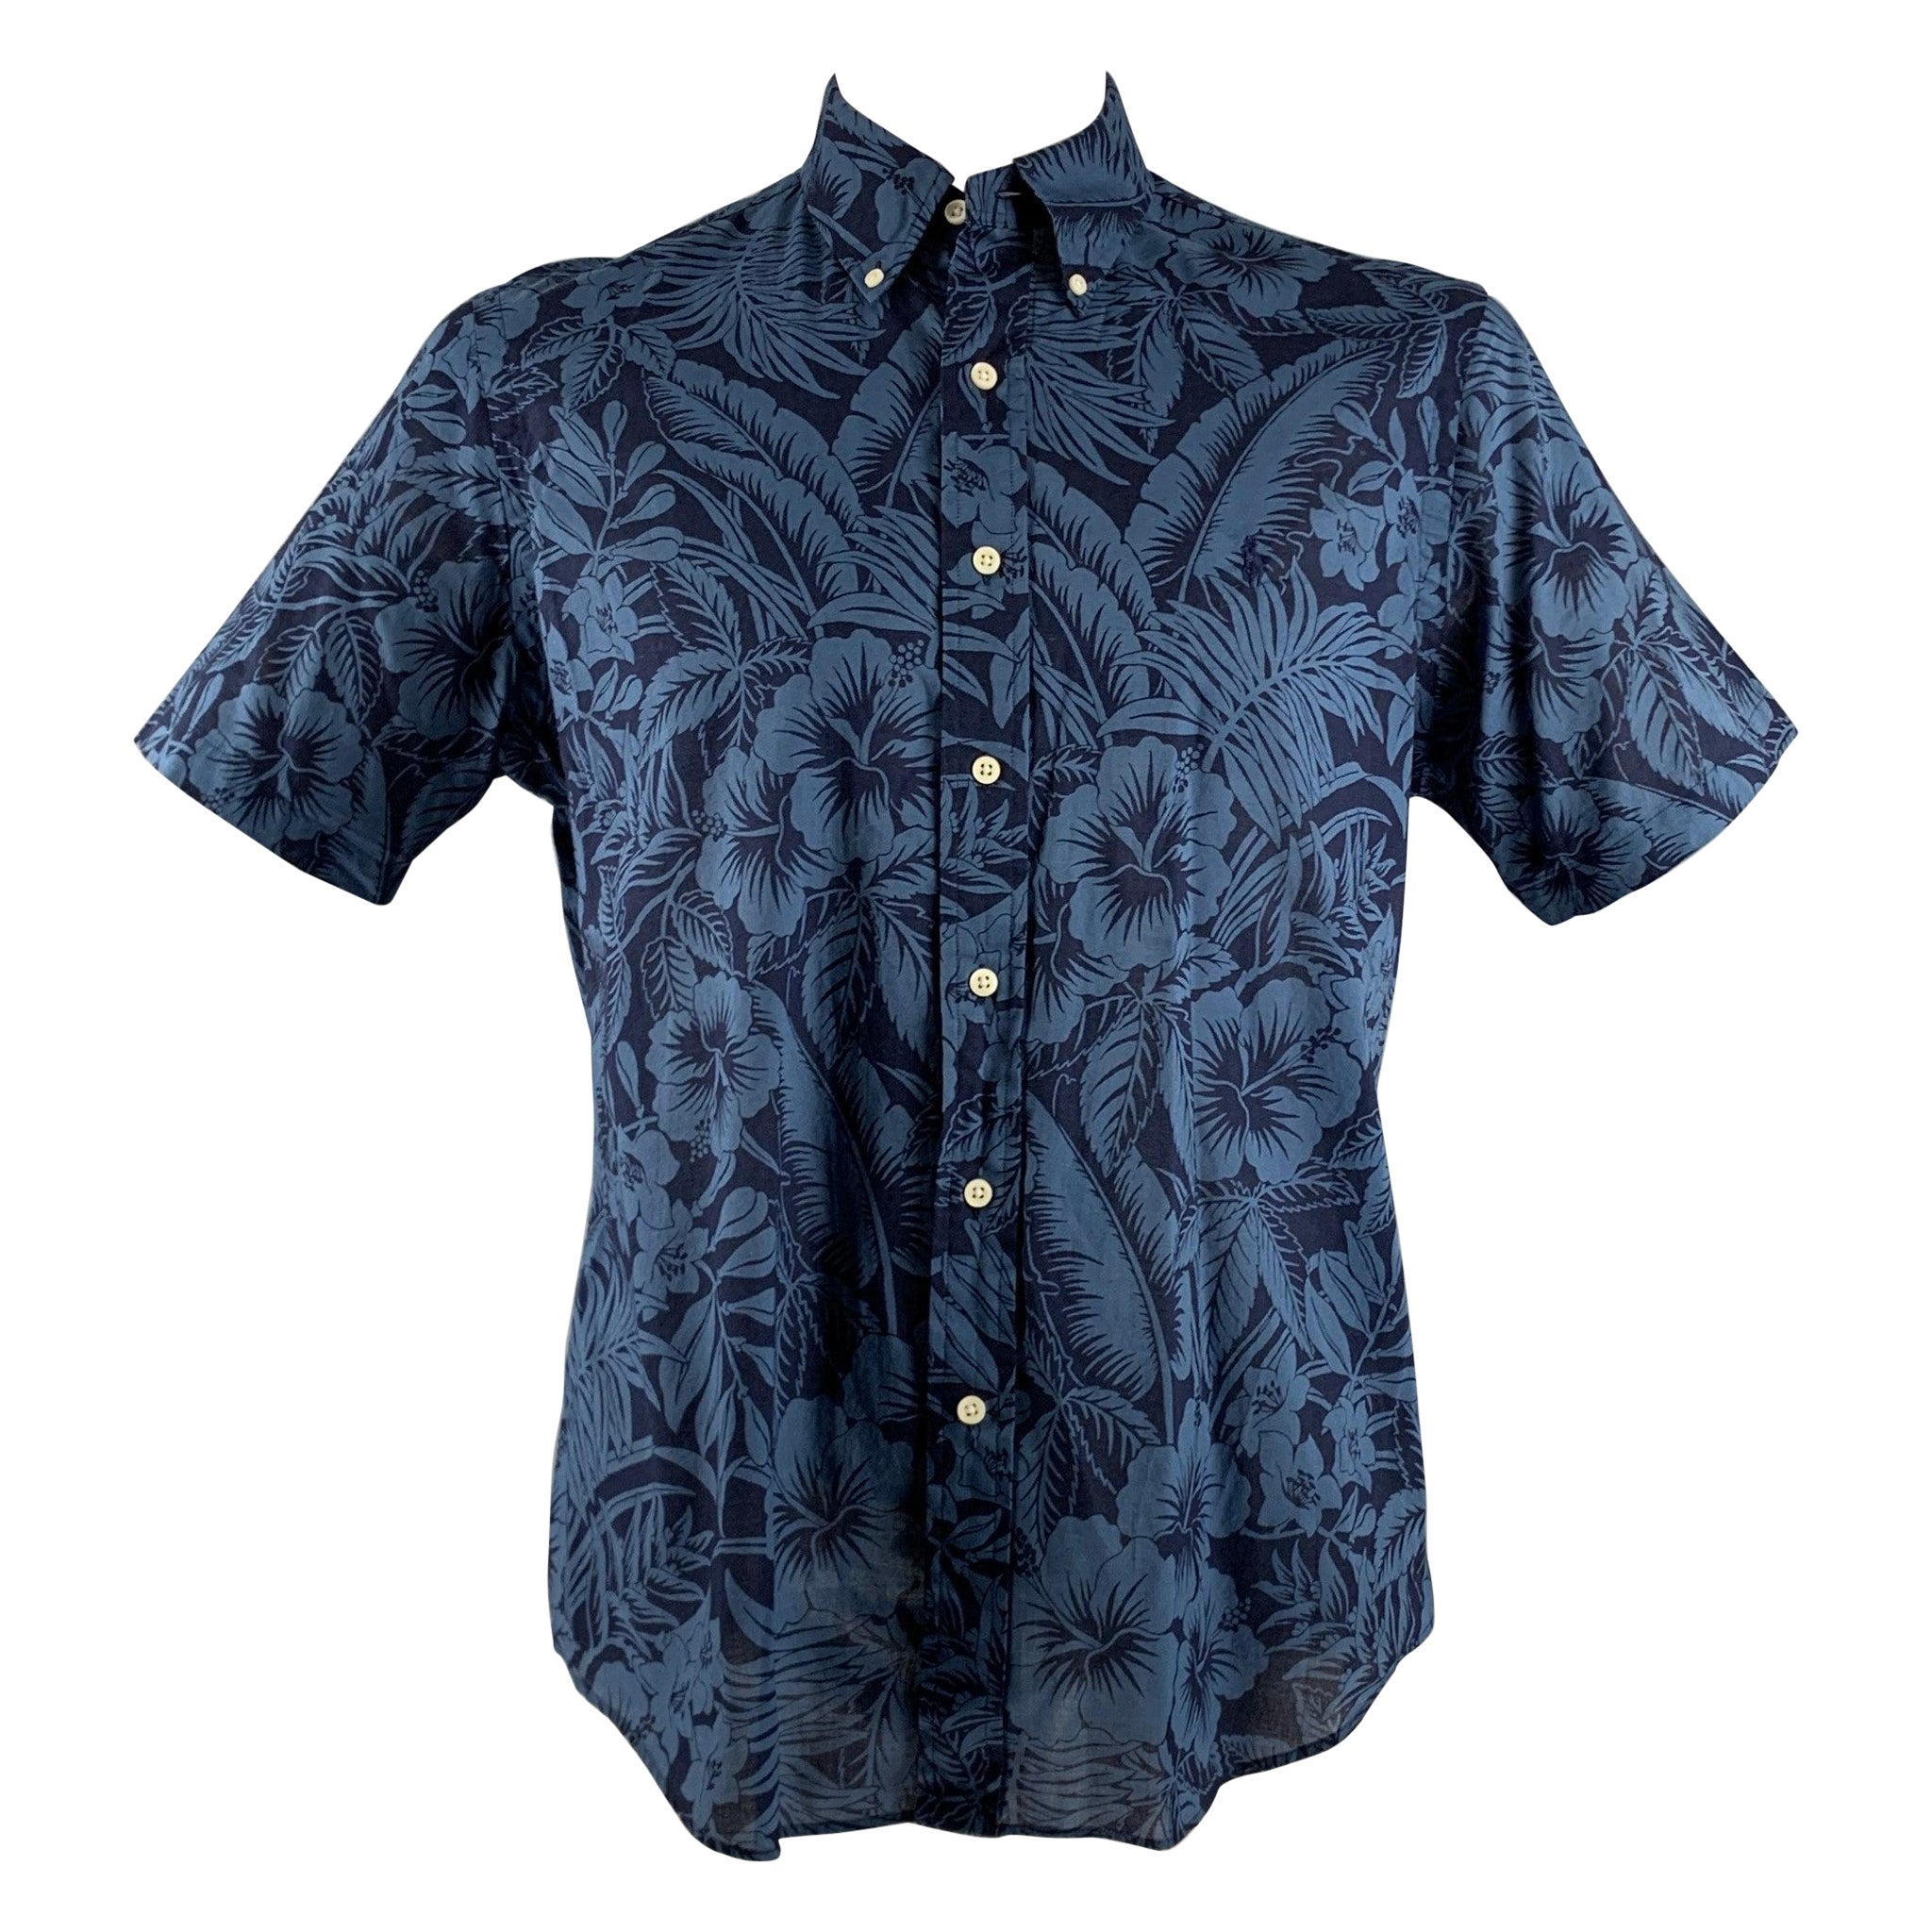 RALPH LAUREN Size L Navy Blue Floral Cotton Classic Short Sleeve Shirt